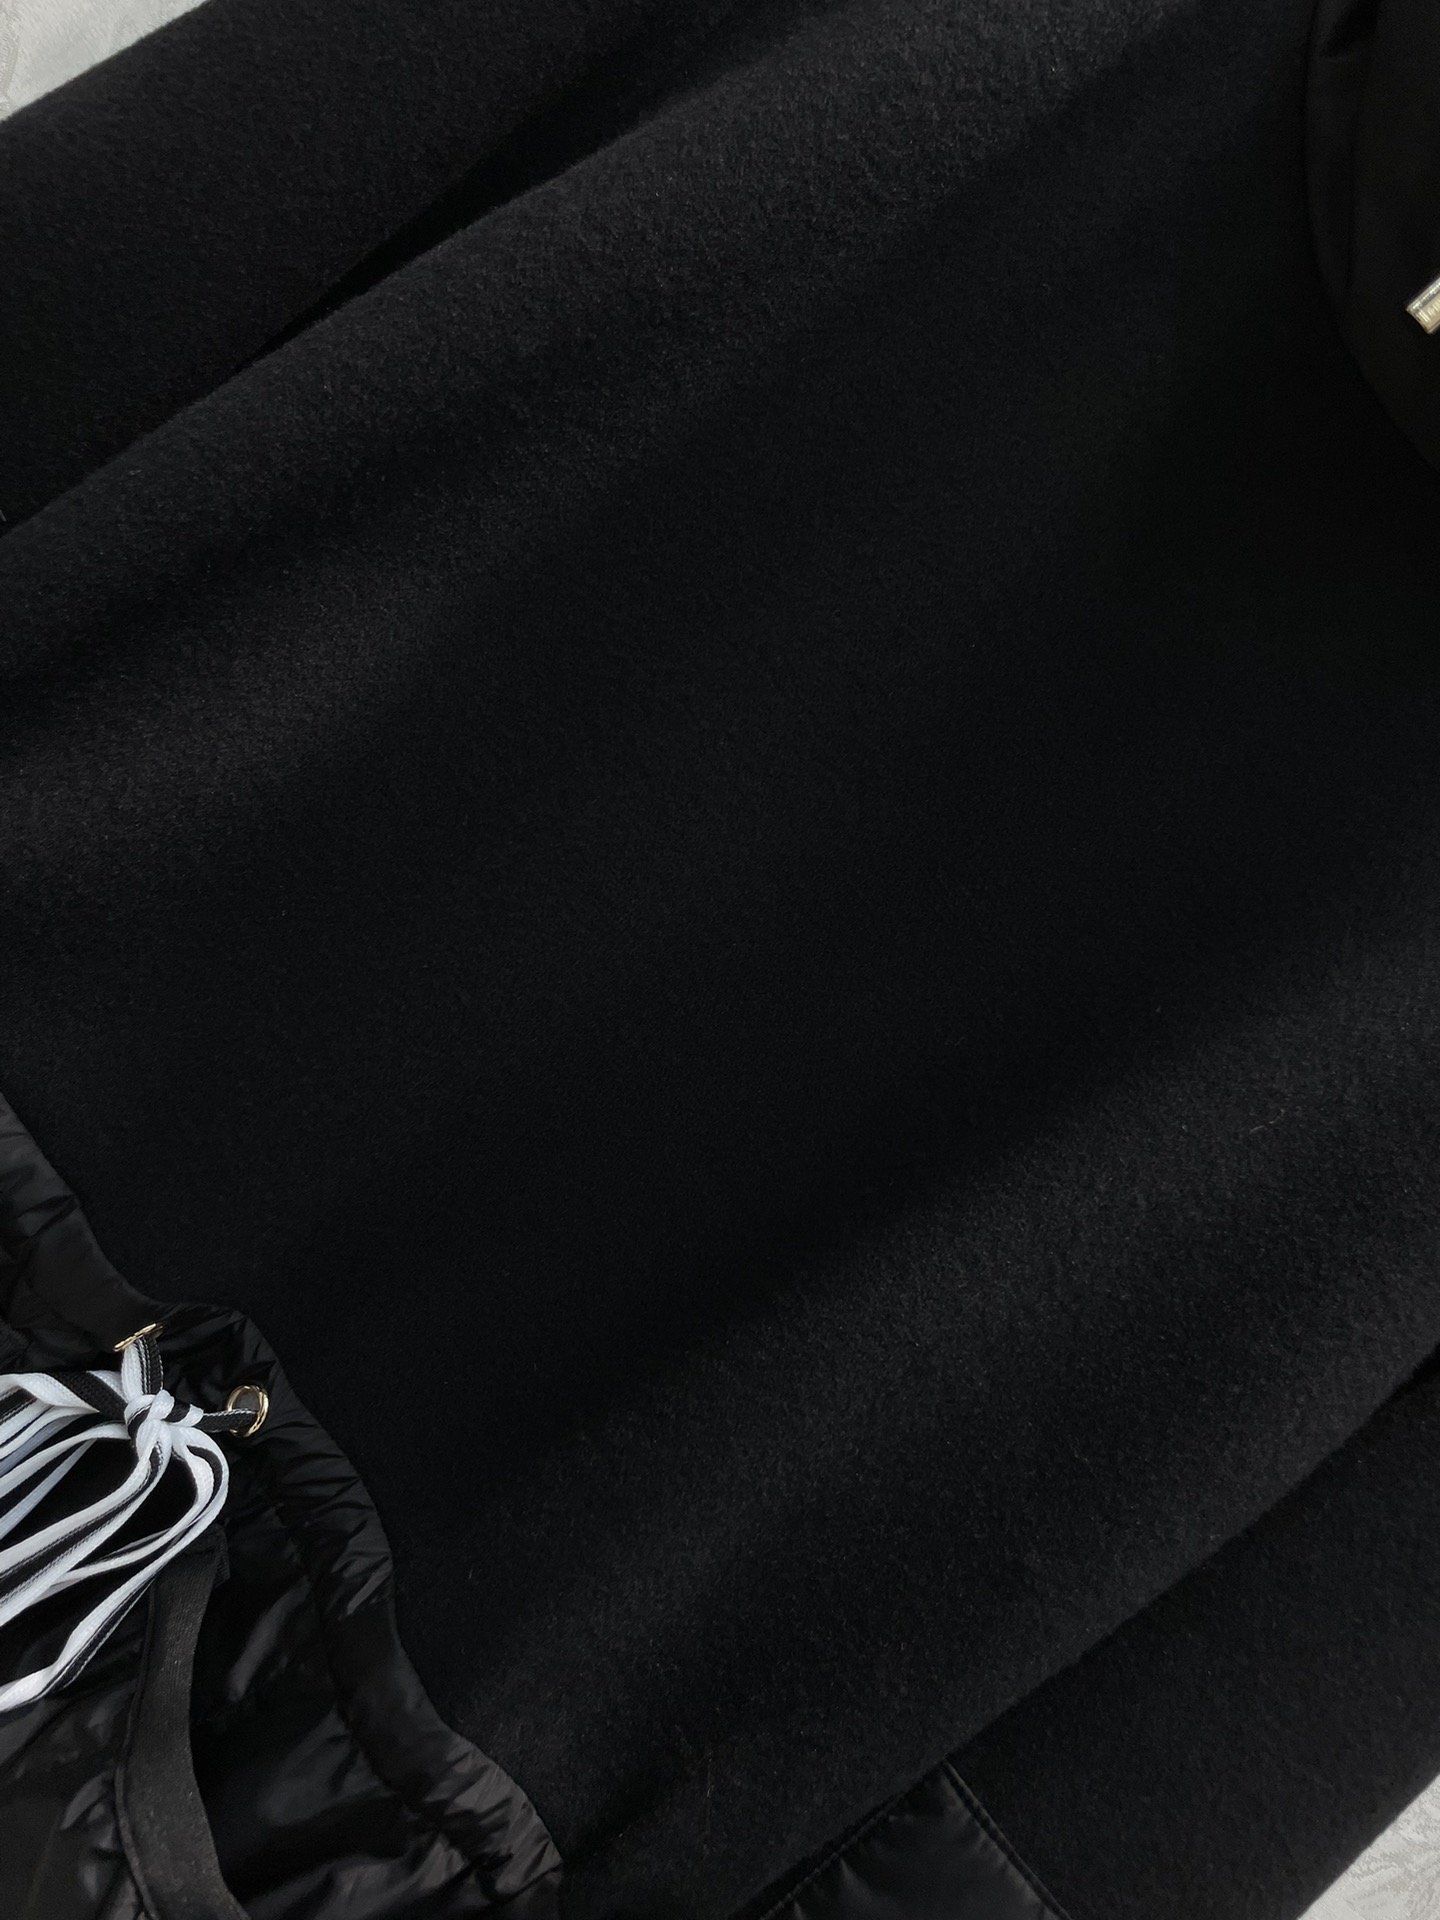 L家23秋冬新款雪花标识立领套头上衣拼接设计腰间配有抽绳可收腰调节轻盈的尼龙嵌片高领袖口和腰部的实用抽绳